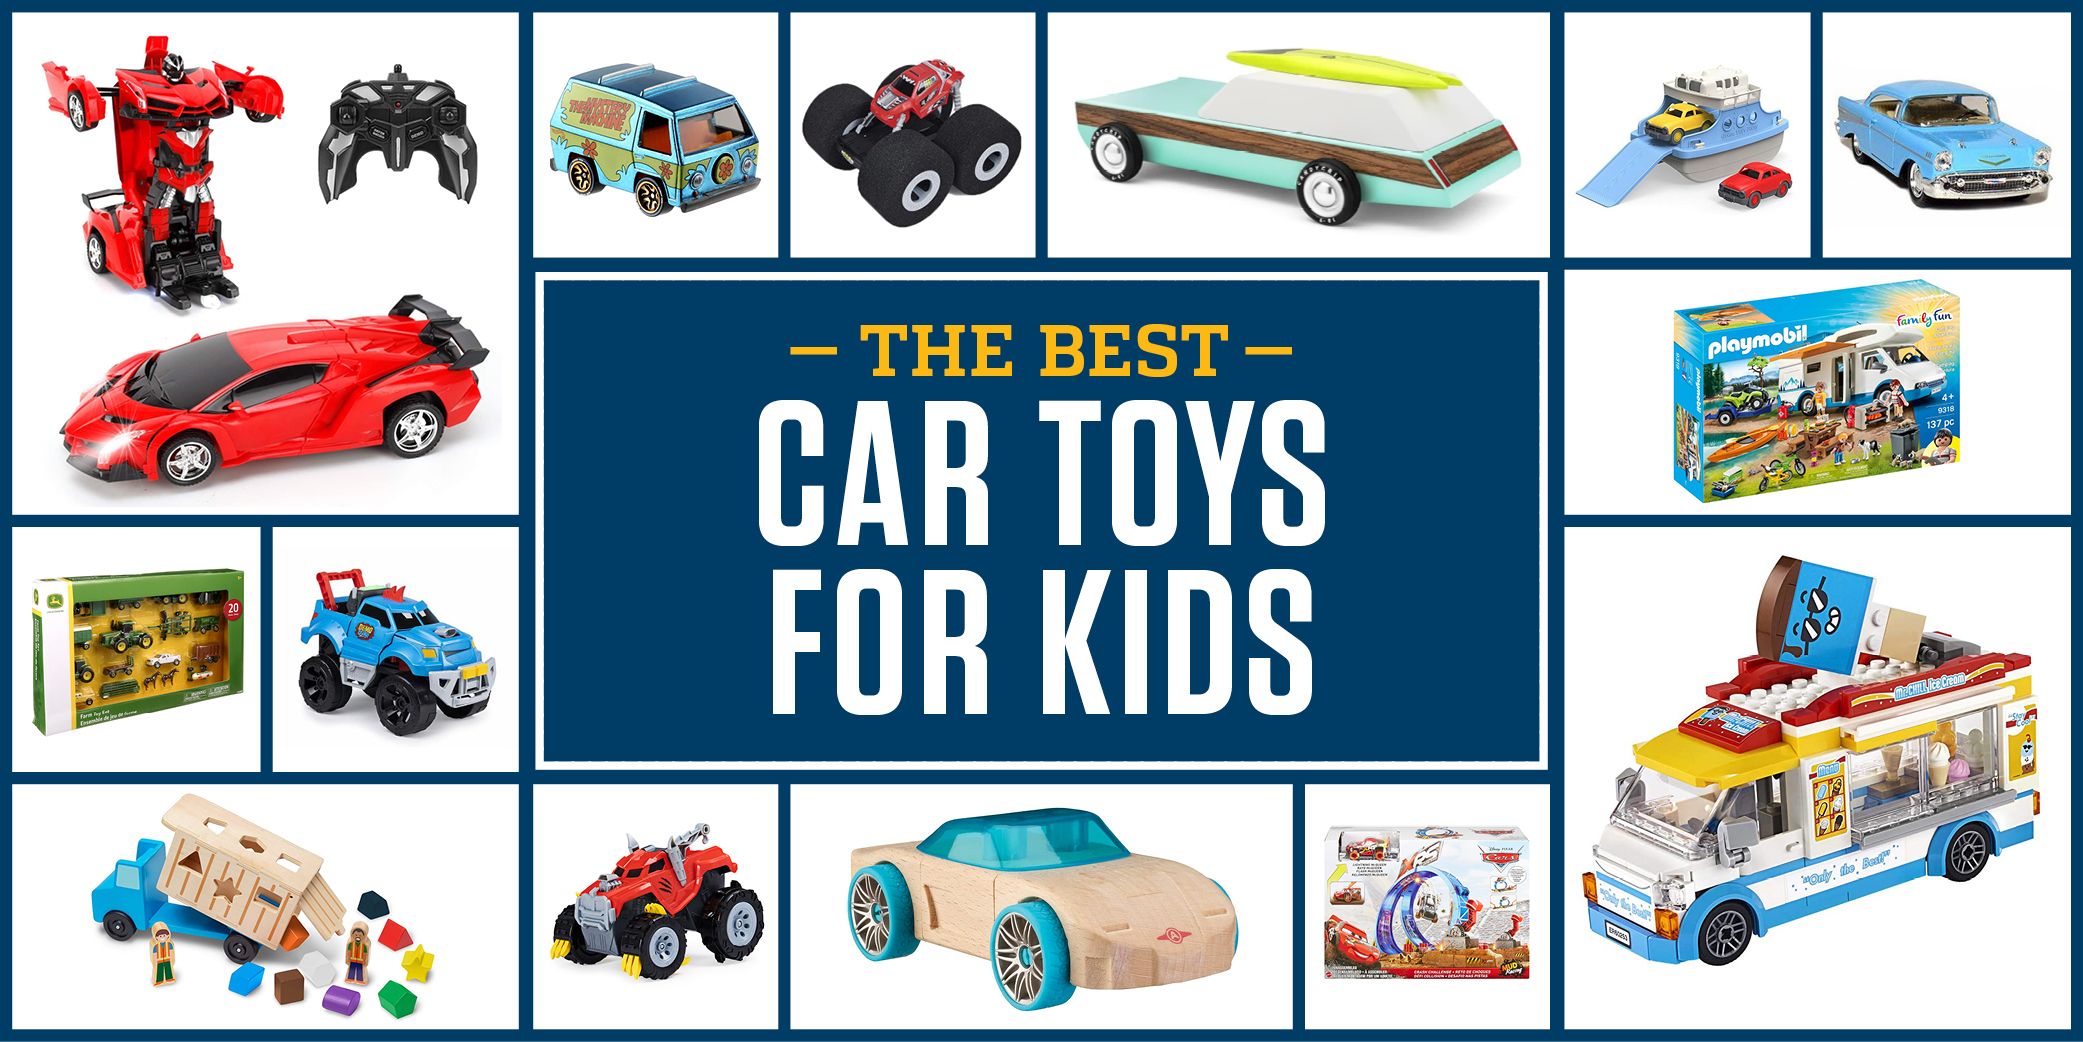 car toys website